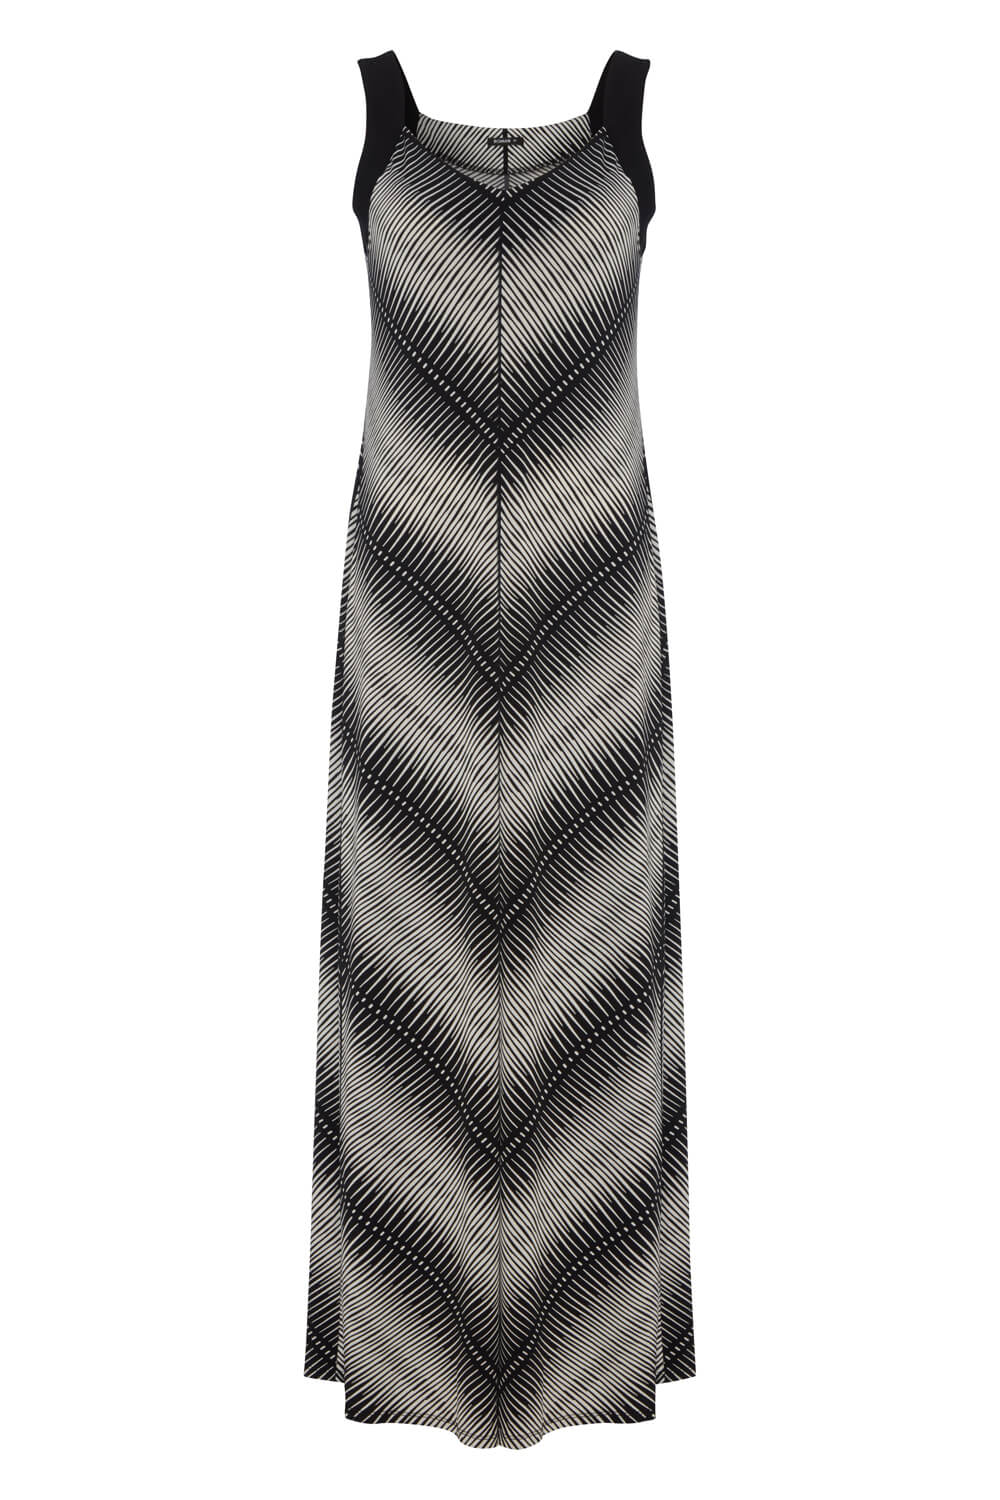 Black Monochrome Chevron Maxi Dress, Image 5 of 5